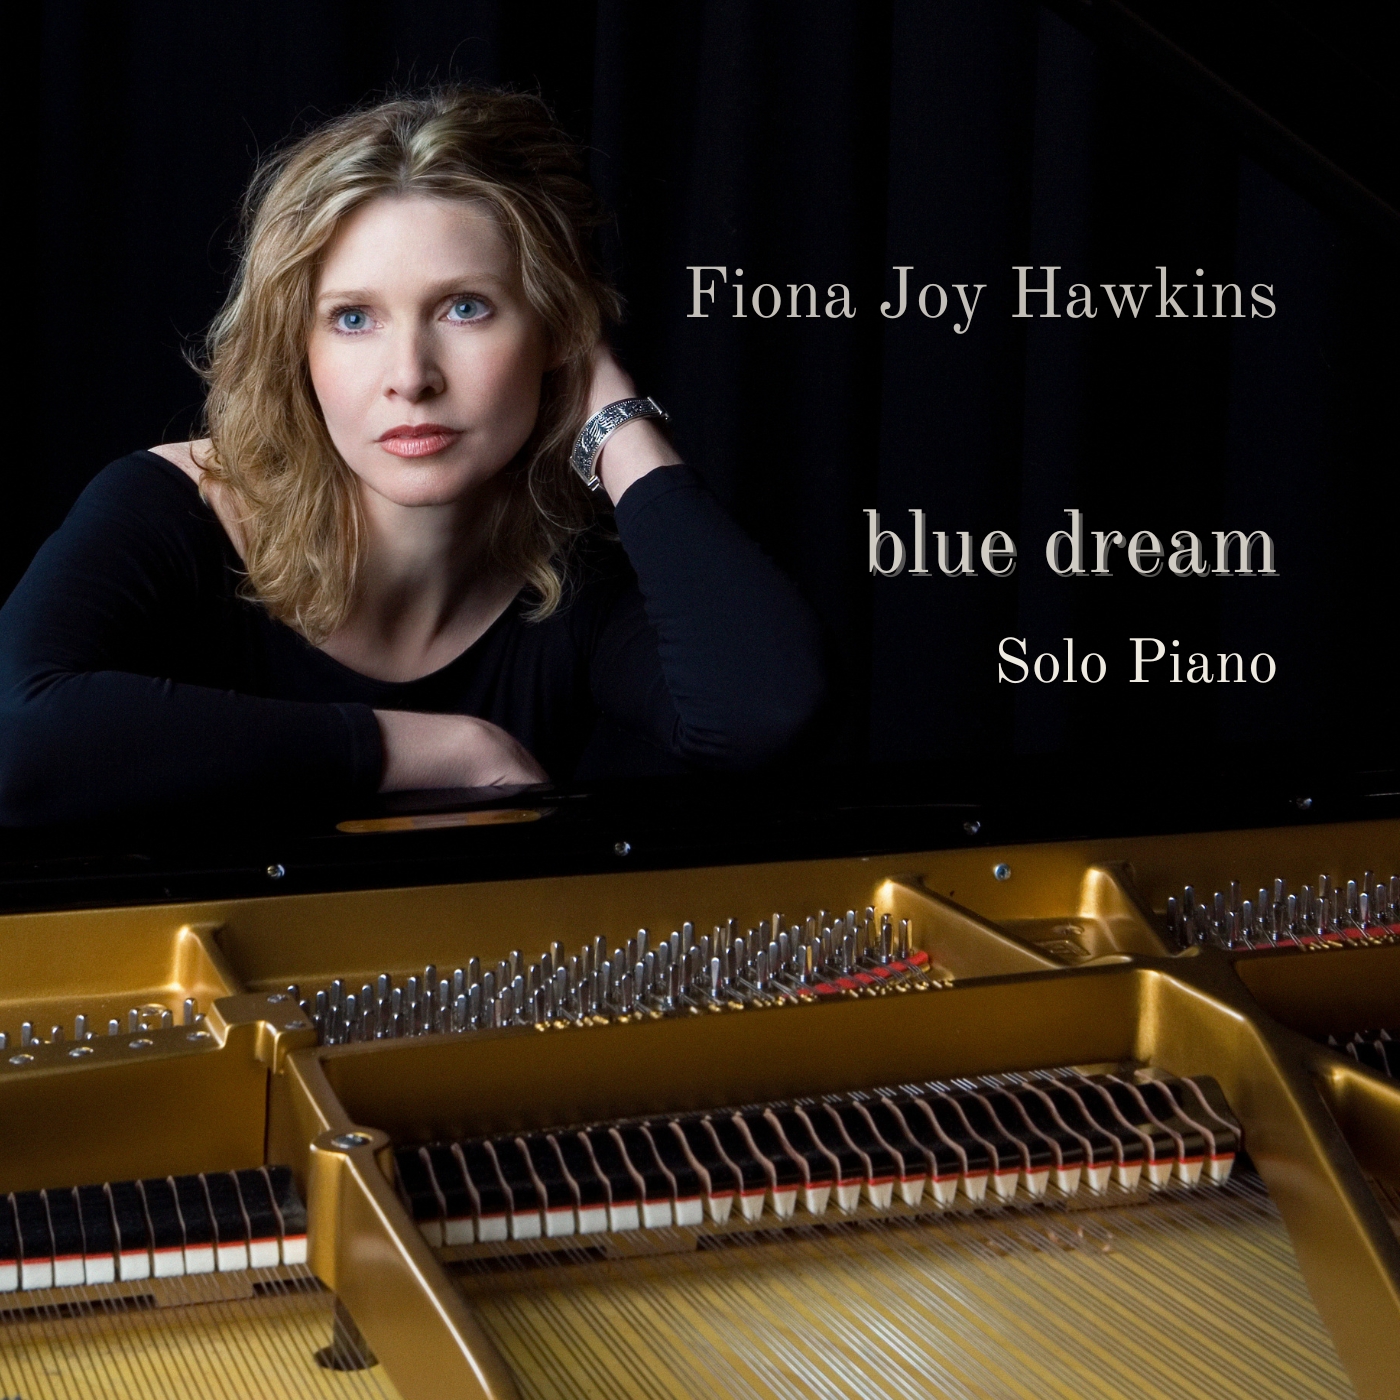 Fiona Joy Hawkins – "Blue Dream - Solo Piano"